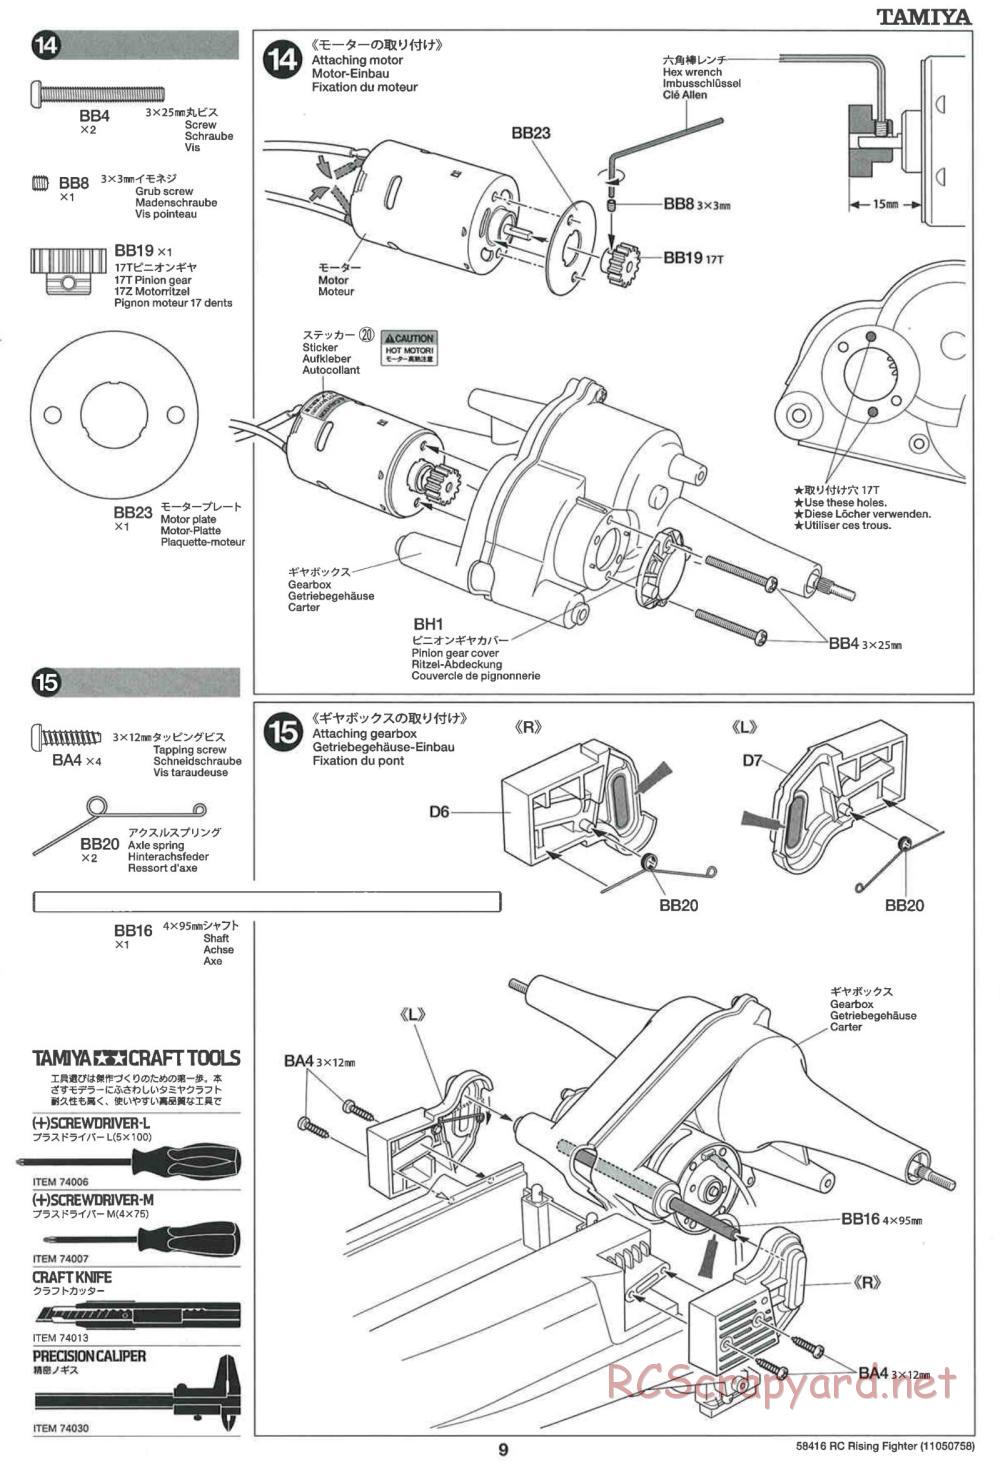 Tamiya - Rising Fighter Chassis - Manual - Page 9